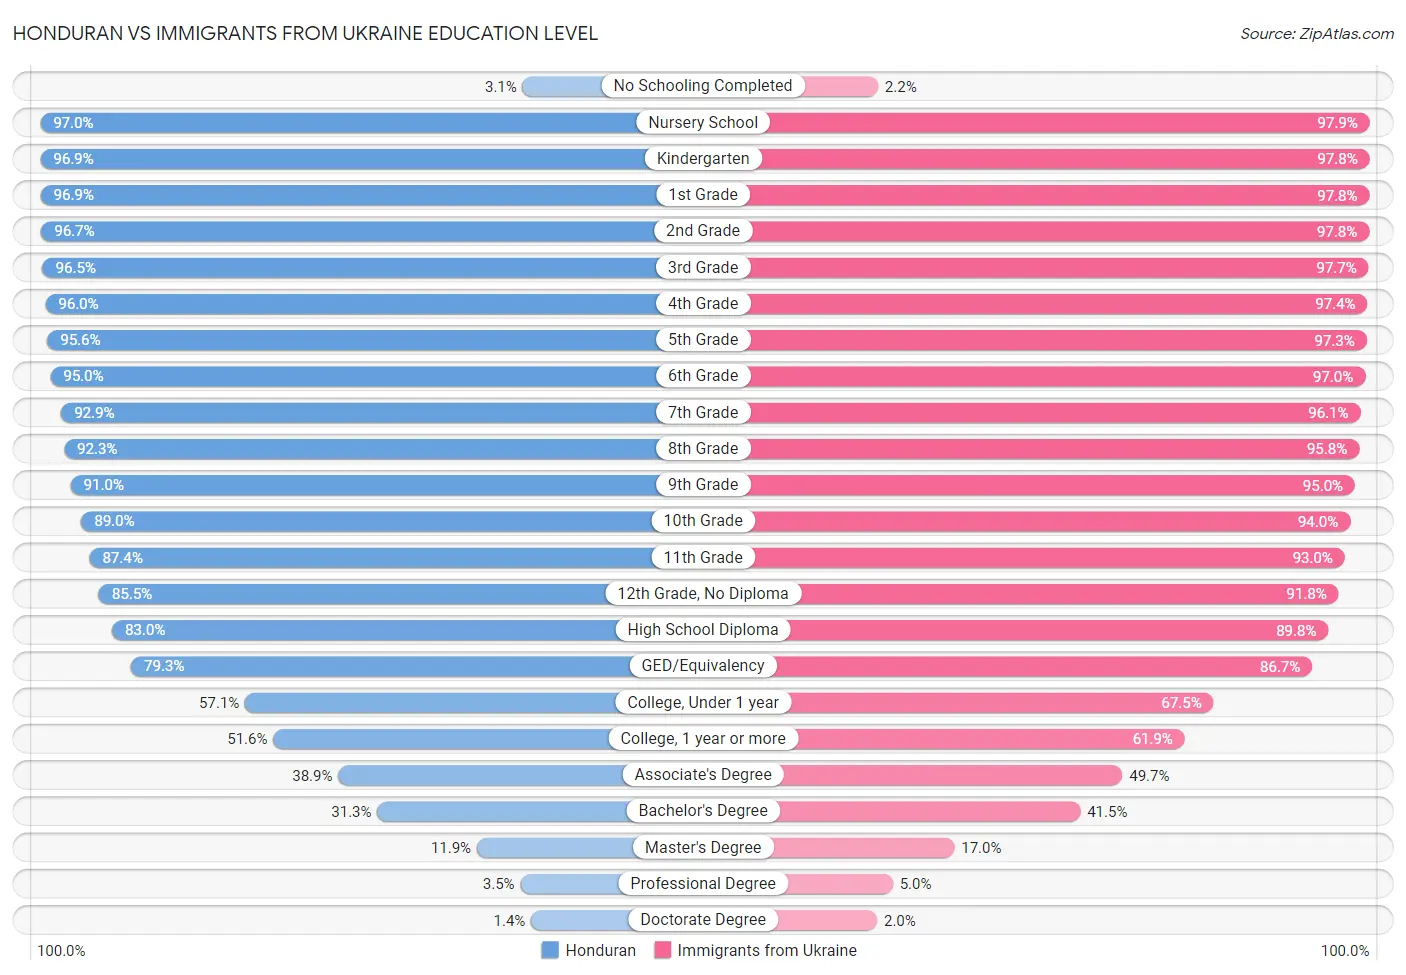 Honduran vs Immigrants from Ukraine Education Level